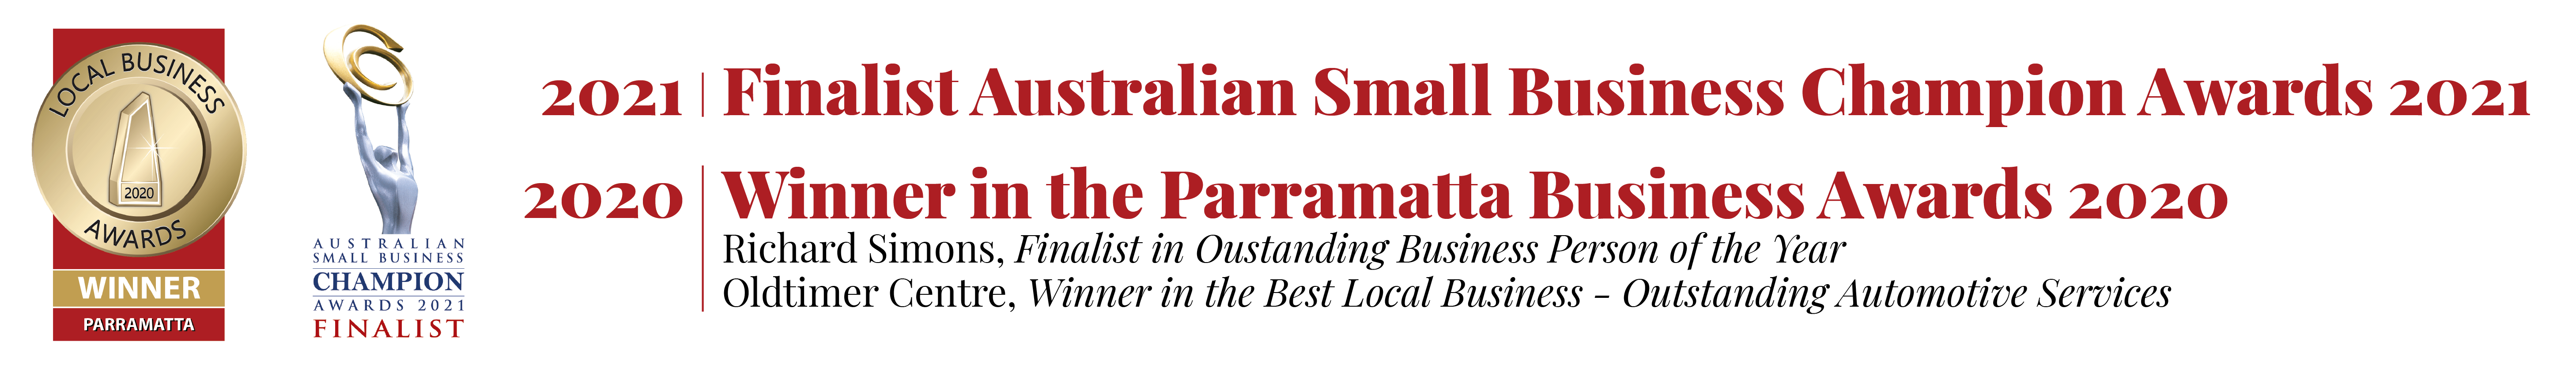 2021 Finalist Australian Small Business Champion Awards 2021